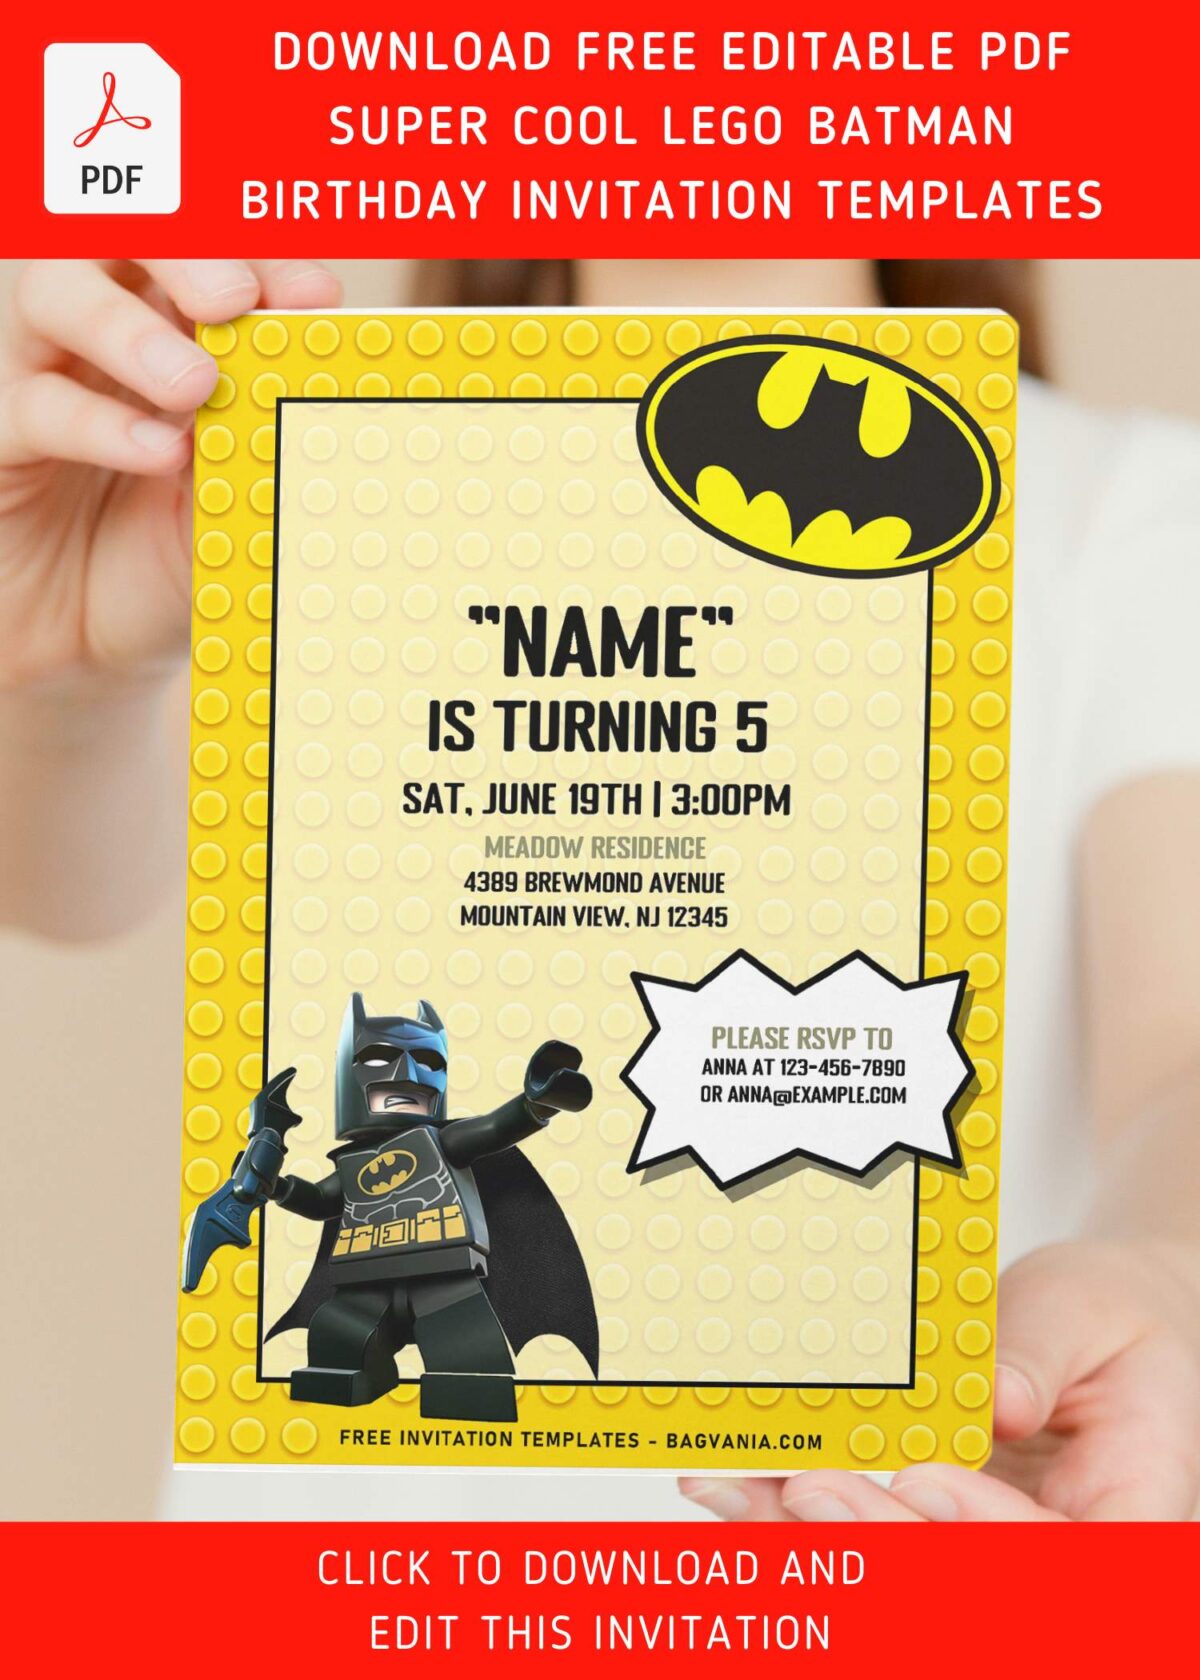 (Free Editable PDF) Super Cool Lego Batman Birthday Invitation Templates with editable text